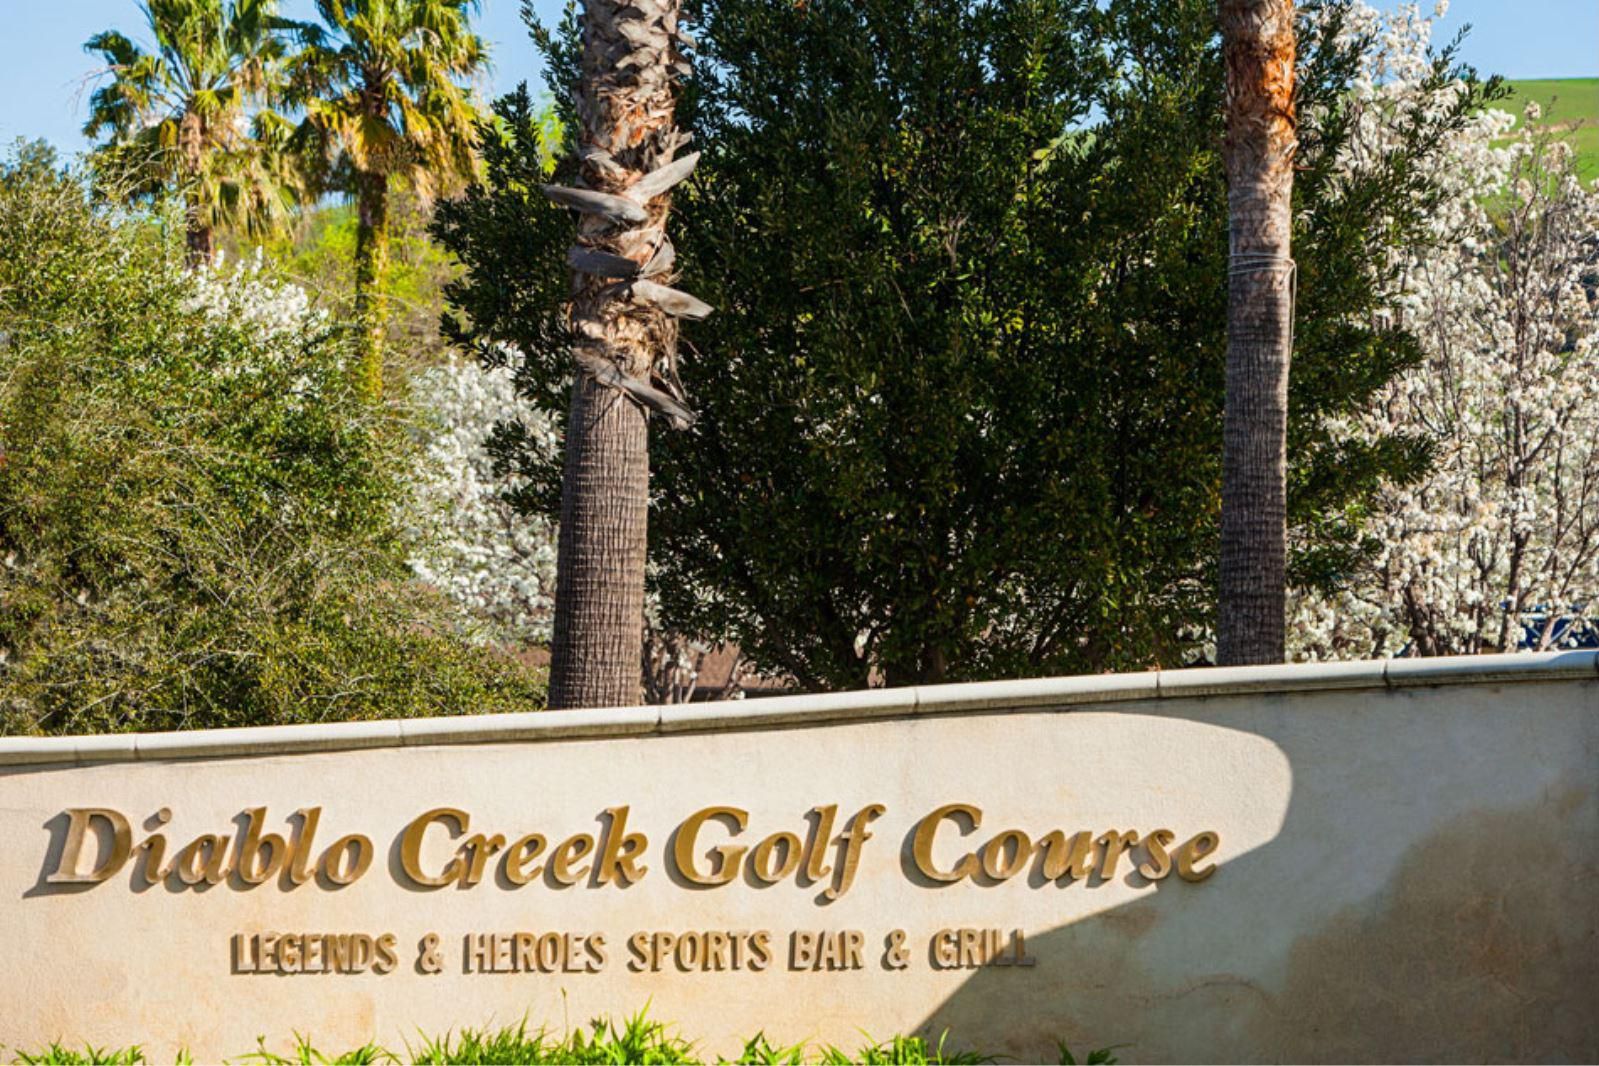 Close the Diablo Creek Golf Course